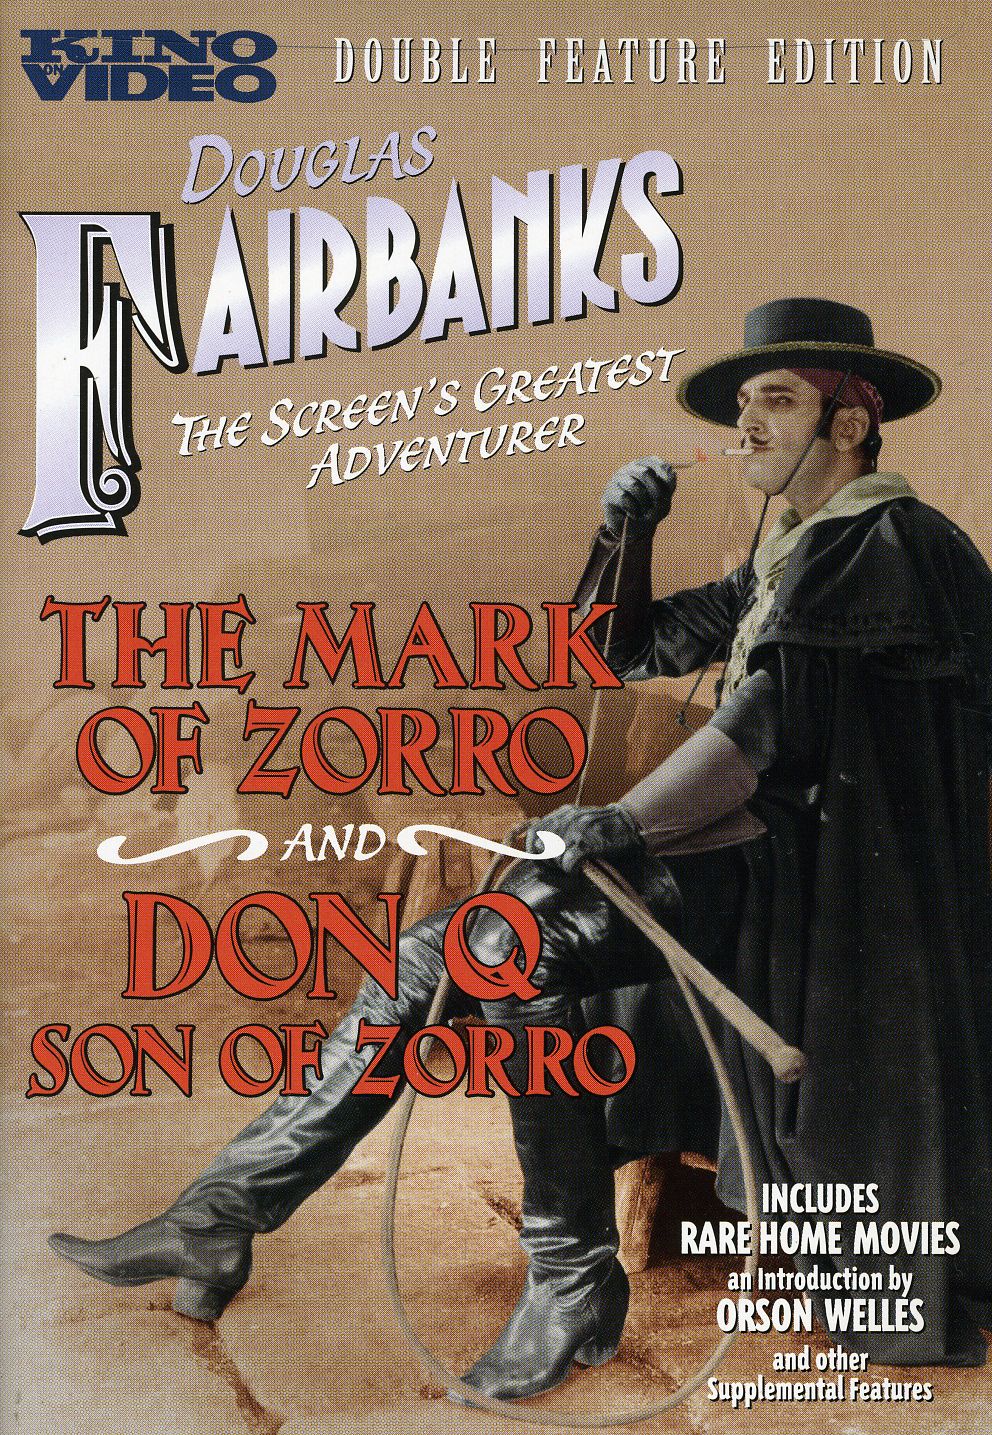 MARK OF ZORRO & DON Q SON OF ZORRO